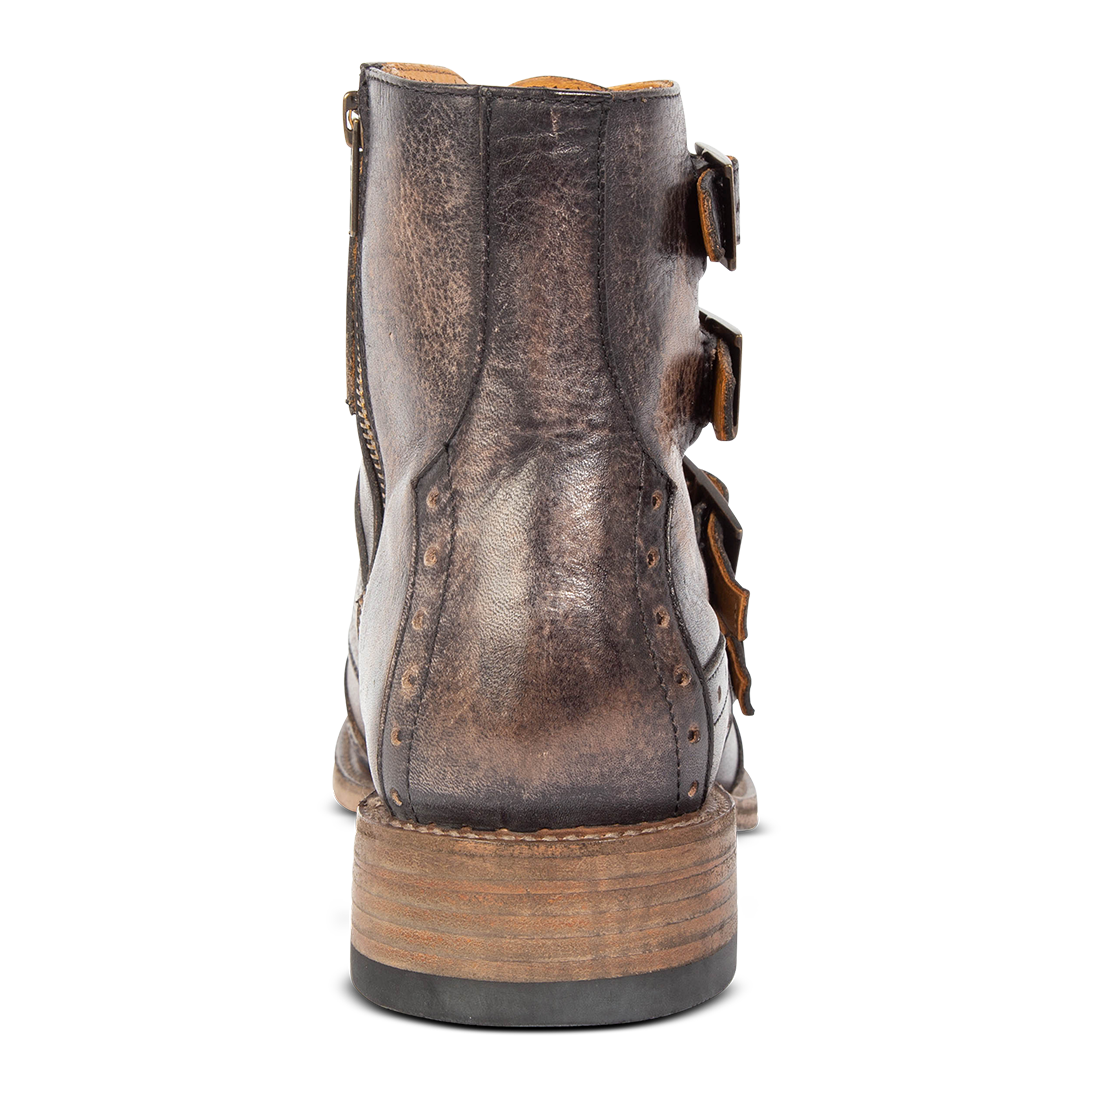 Back view showing brogue detailing and low heel on FREEBIRD men's Penn black dress boot